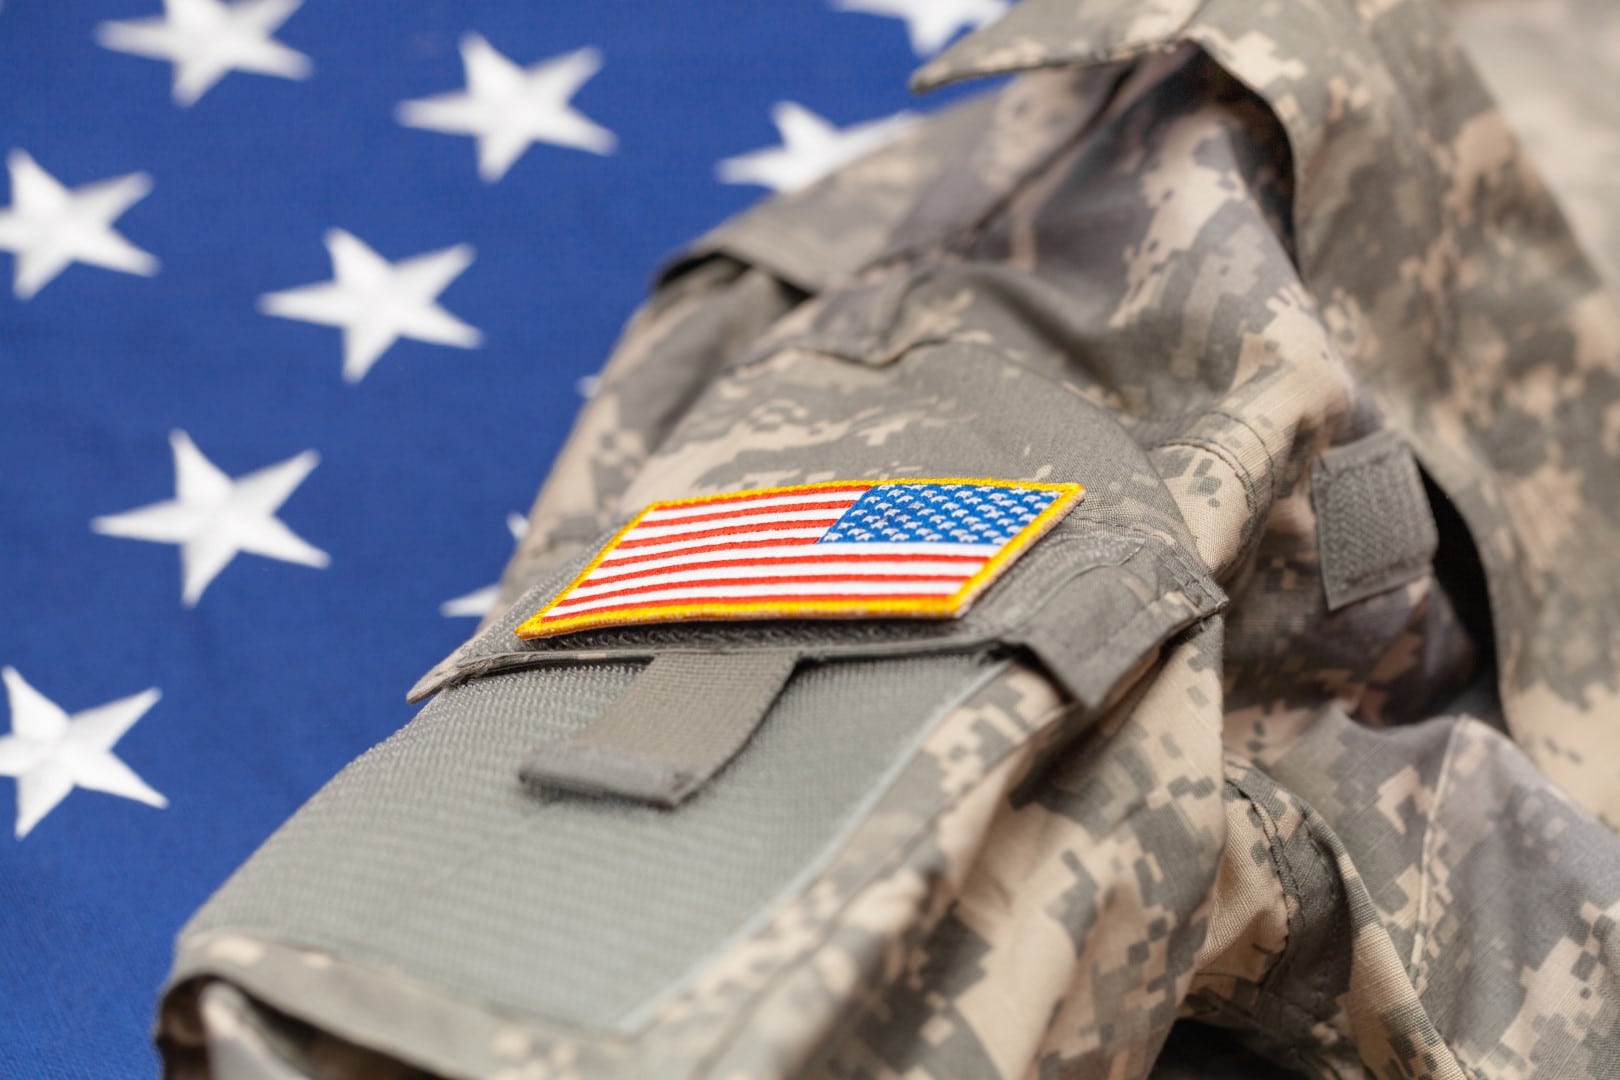 USA army uniform over national flag - studio shot